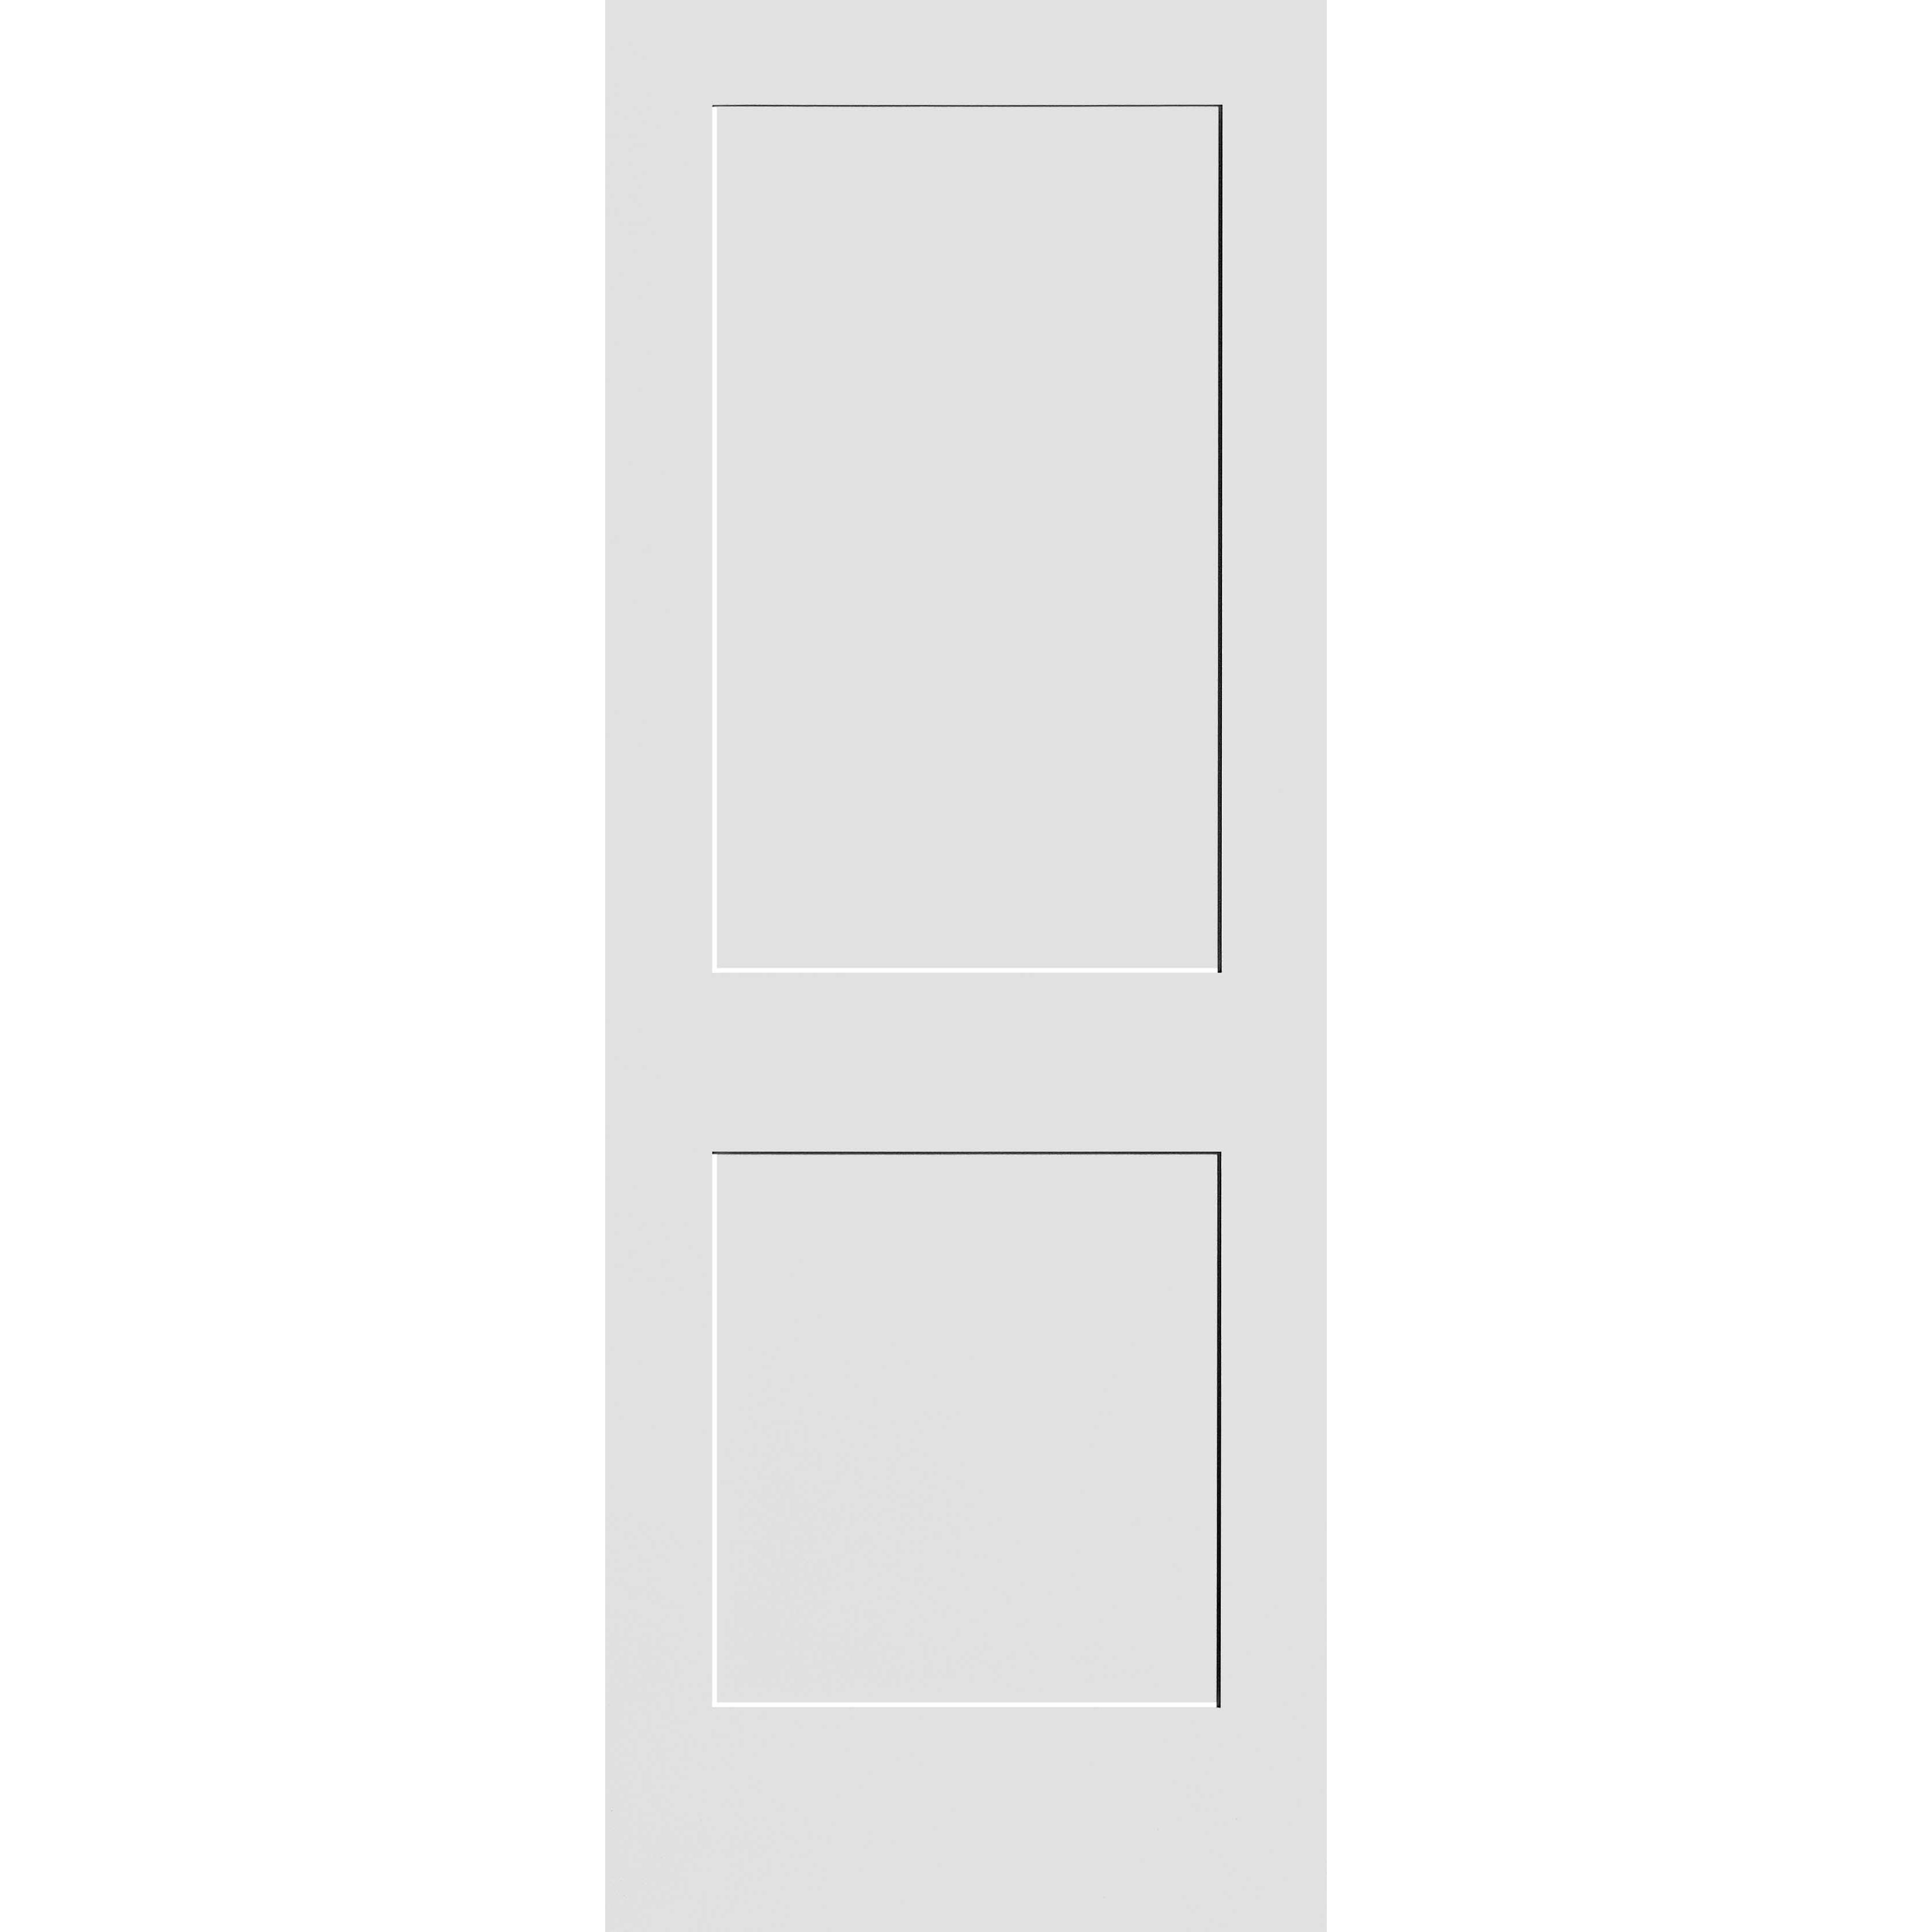 26X84 #8402 MDF PRIMED SHAKER PANEL INTERIOR DOOR 1-3/4 THICKNESS